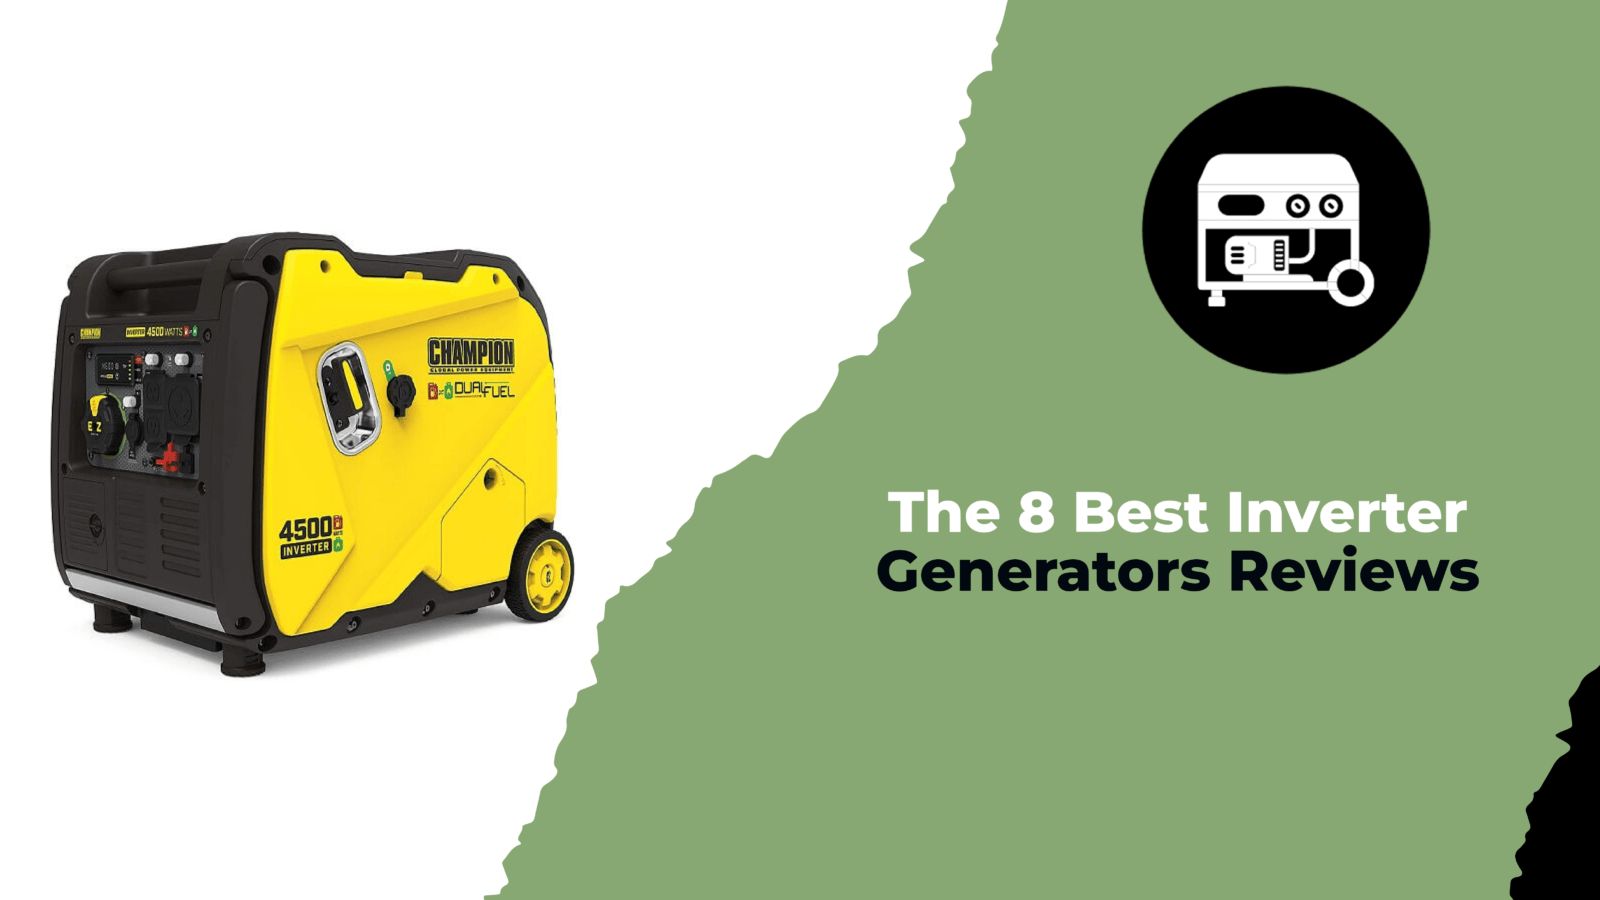 The 8 Best Inverter Generators Reviews